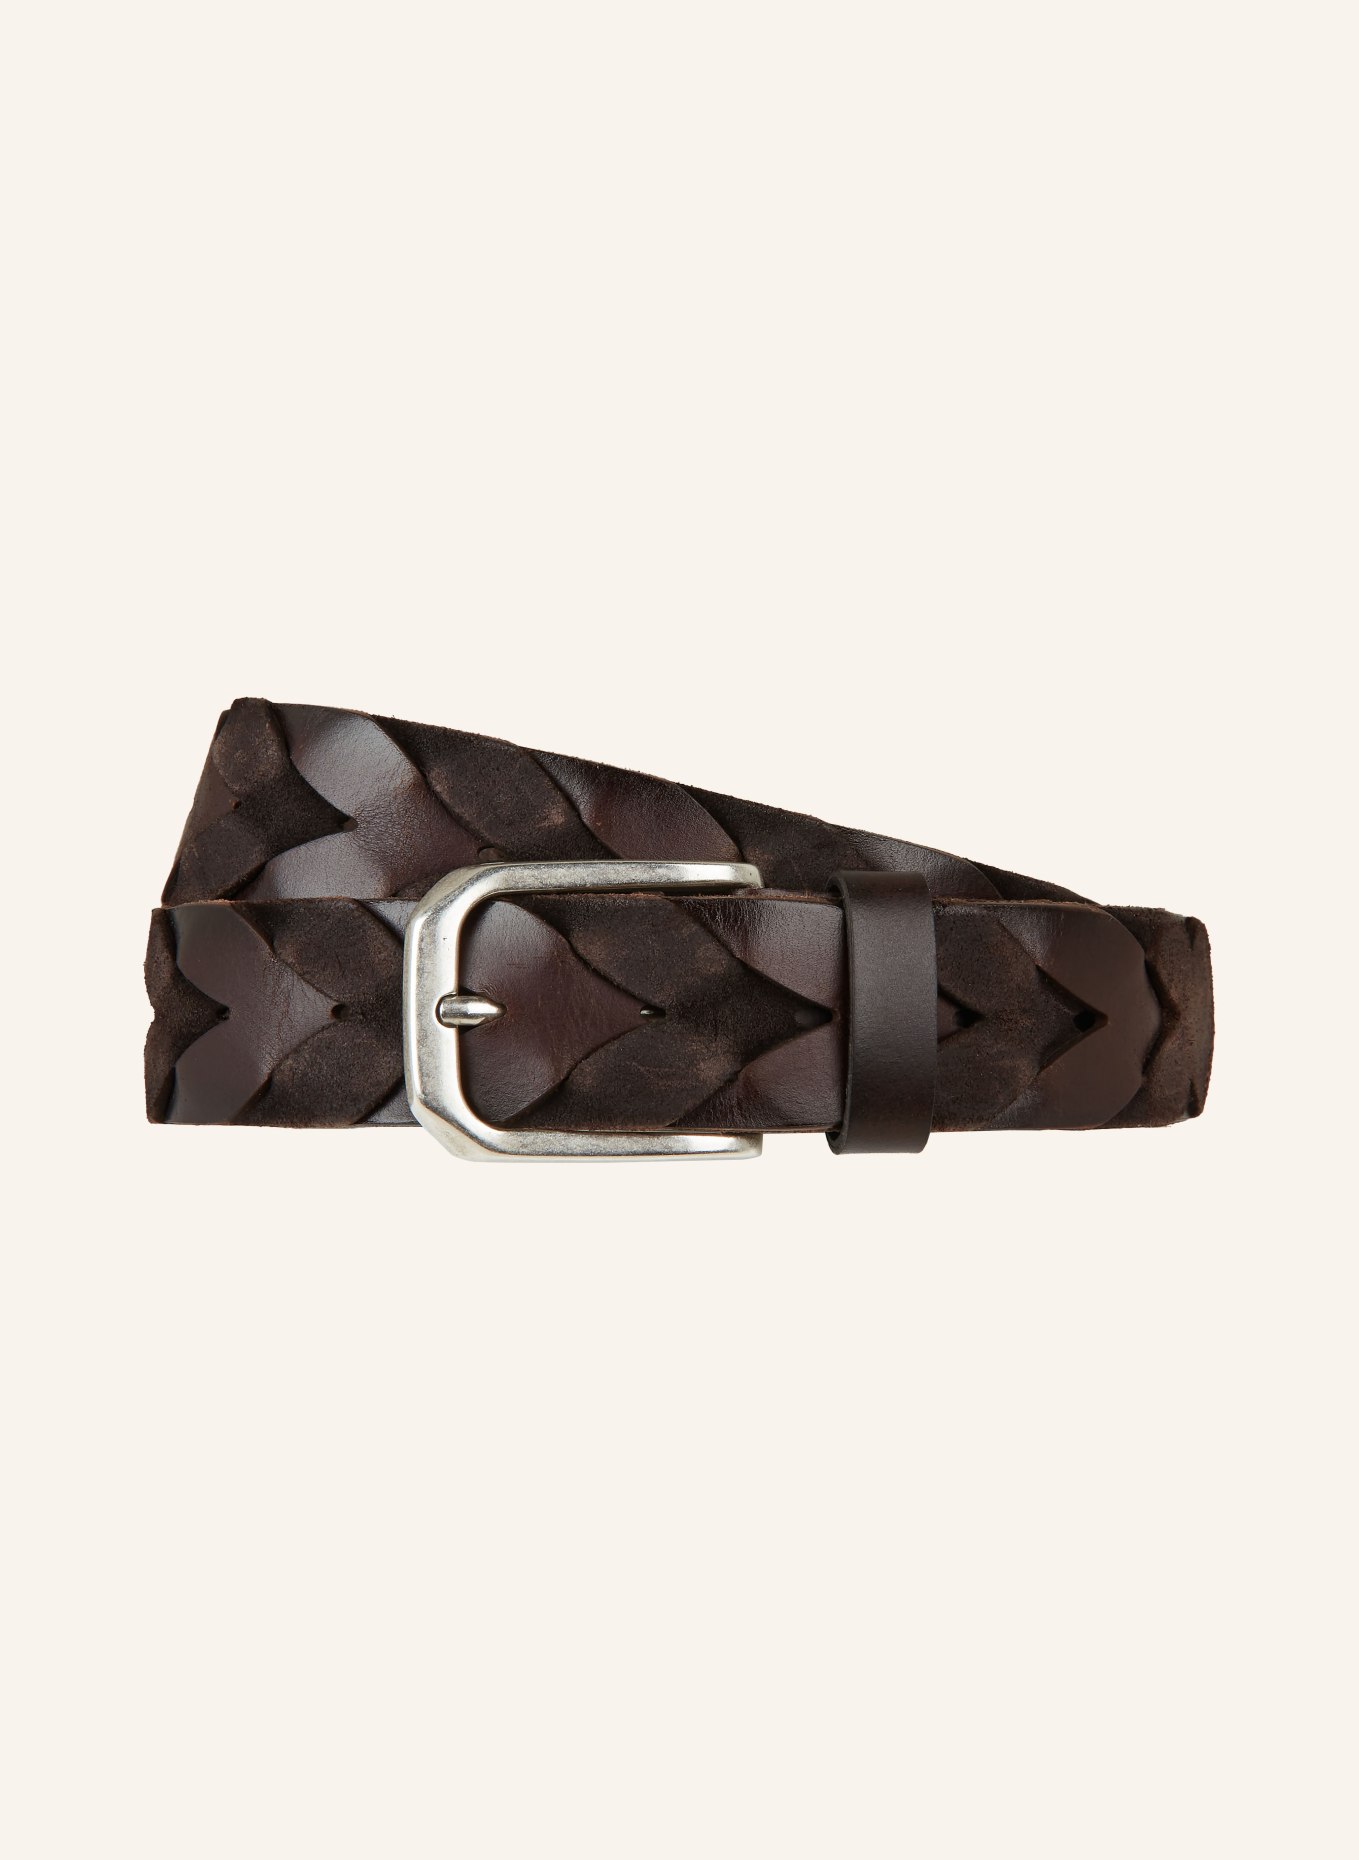 VENETA CINTURE Braided belt made of leather, Color: DARK BROWN (Image 1)